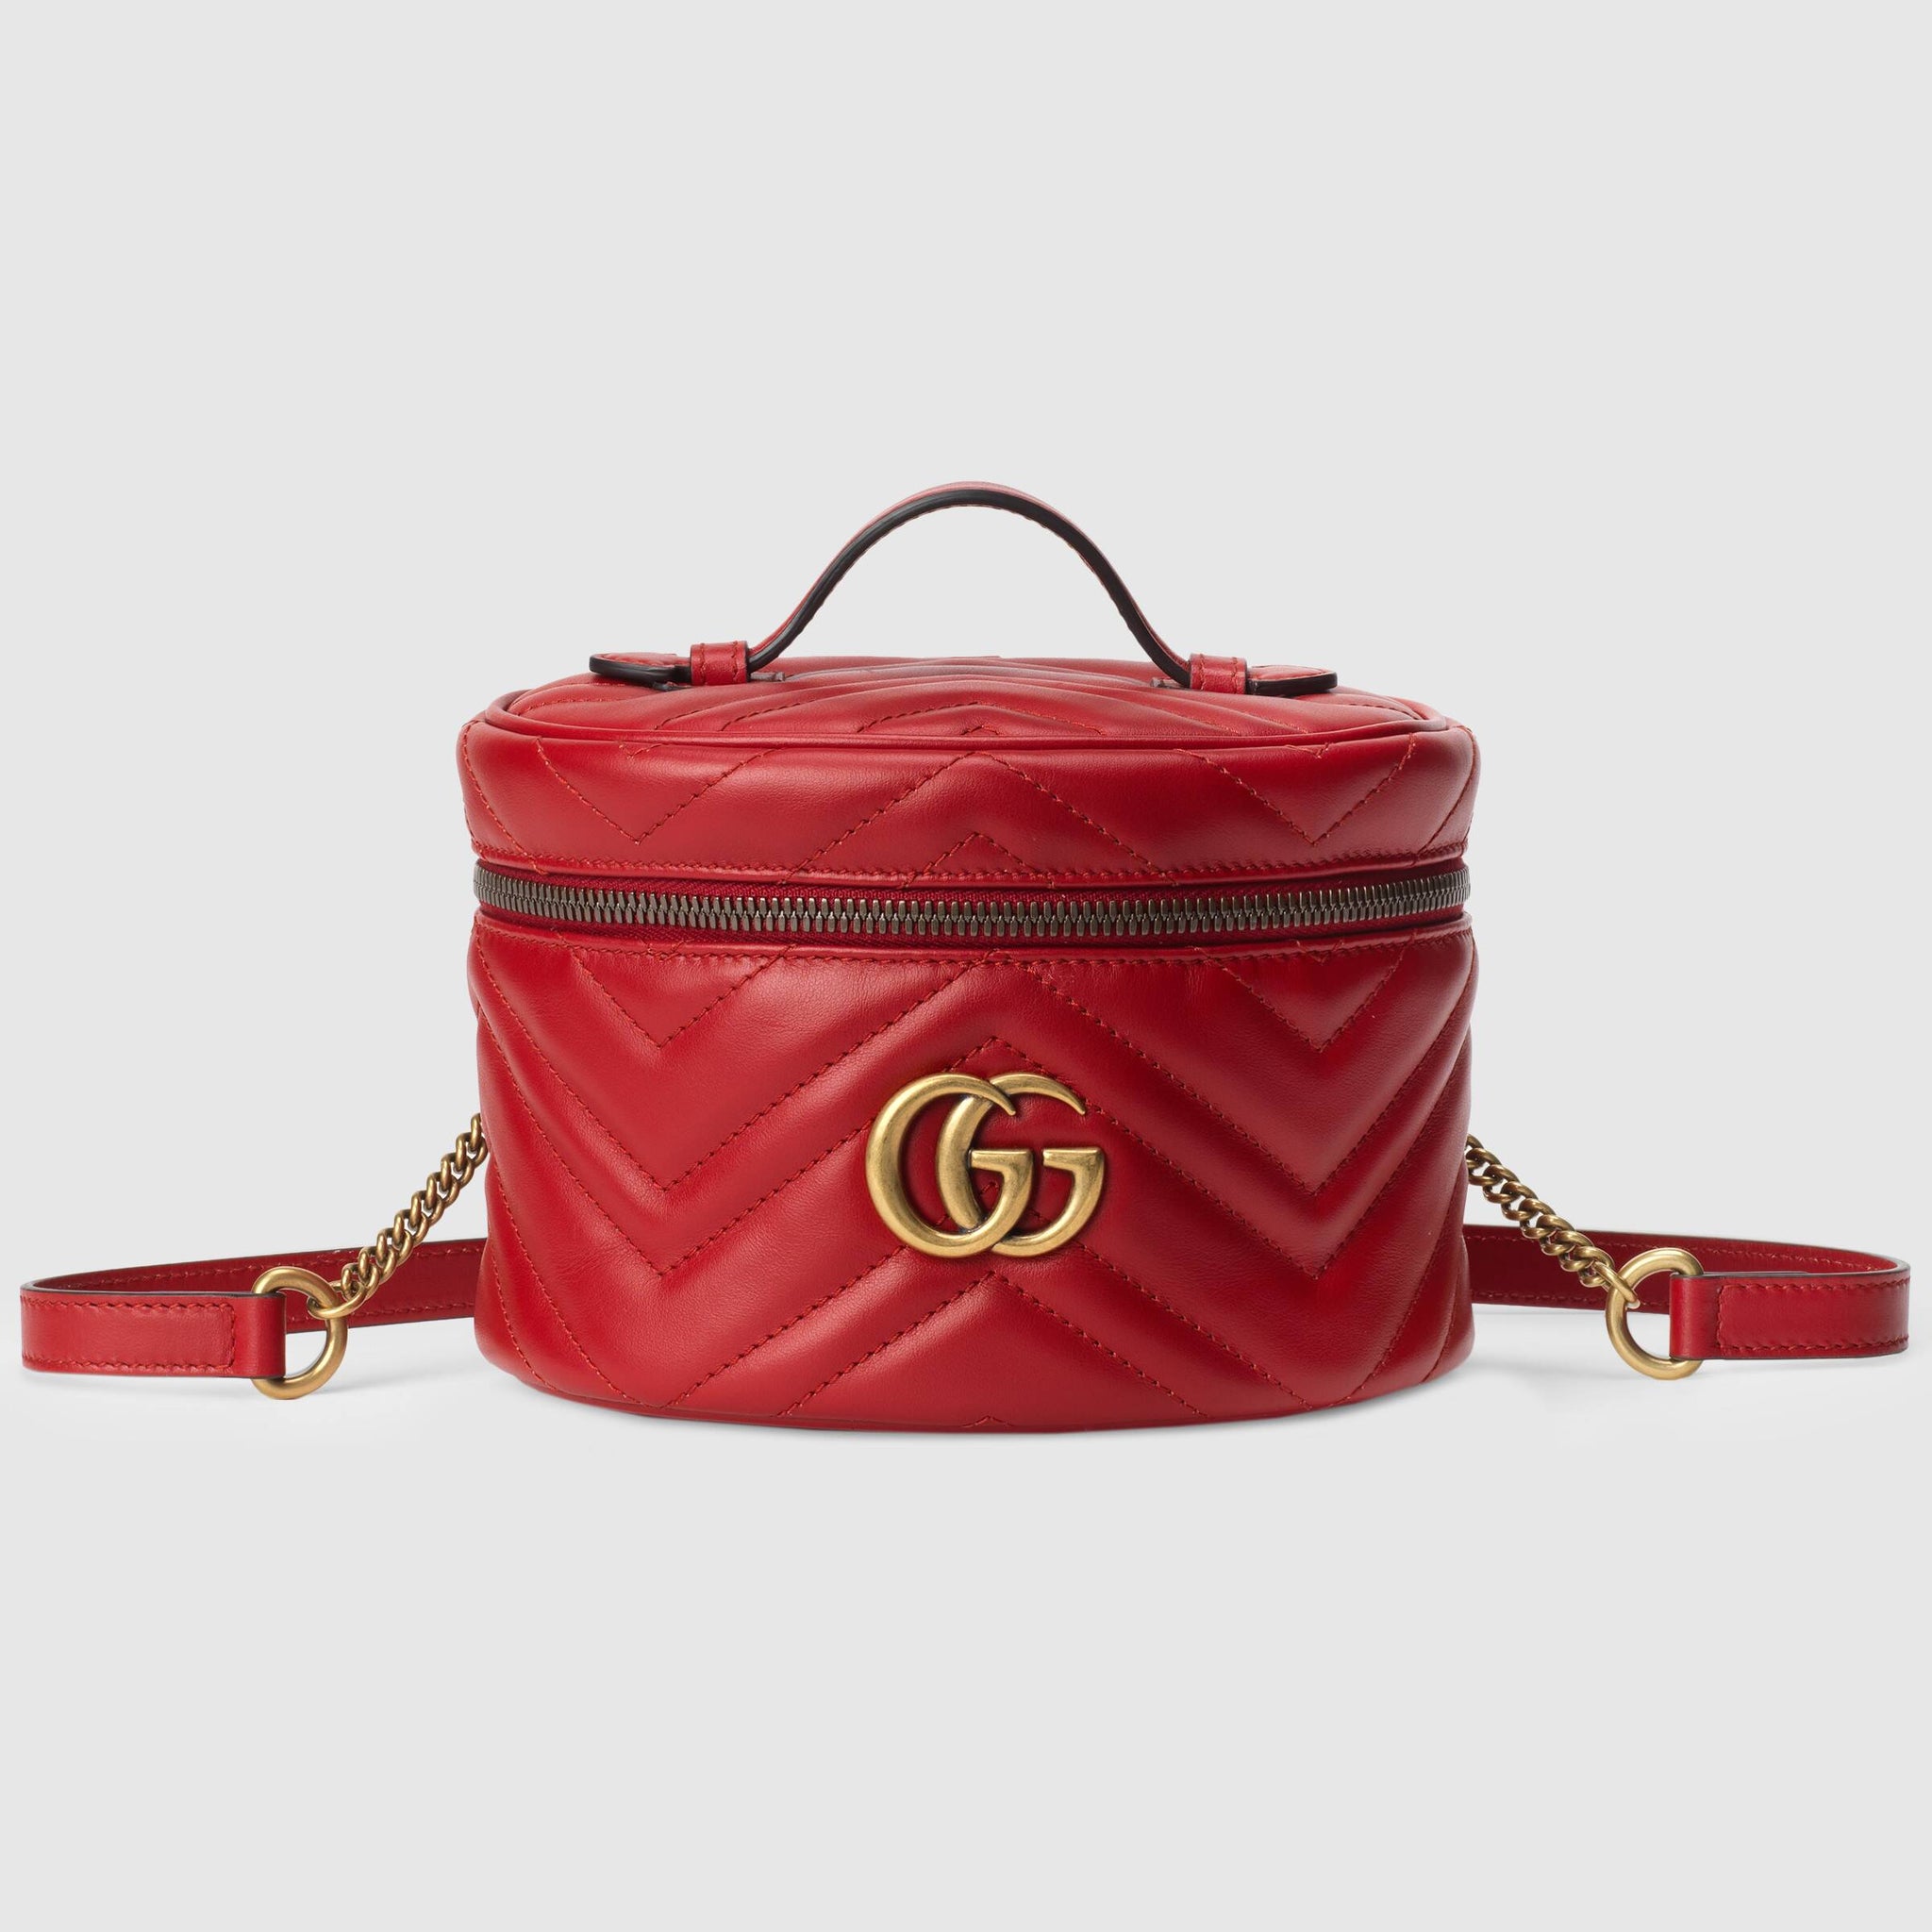 Gucci Calfskin Matelasse Mini GG Marmont Chain Bag Black For Sale